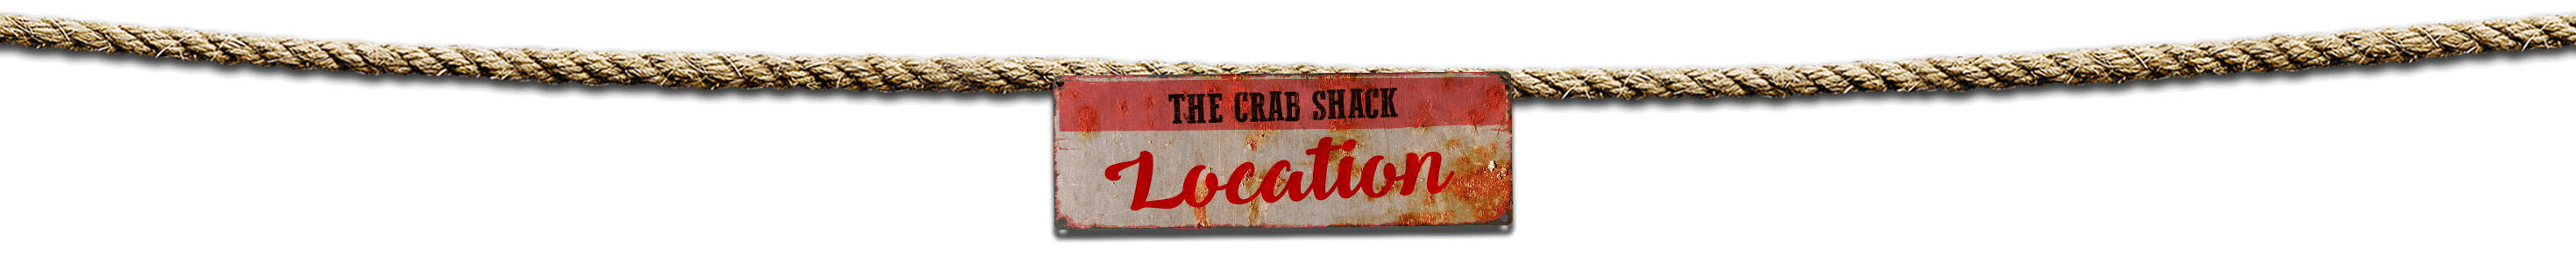 location-the-crab-shack